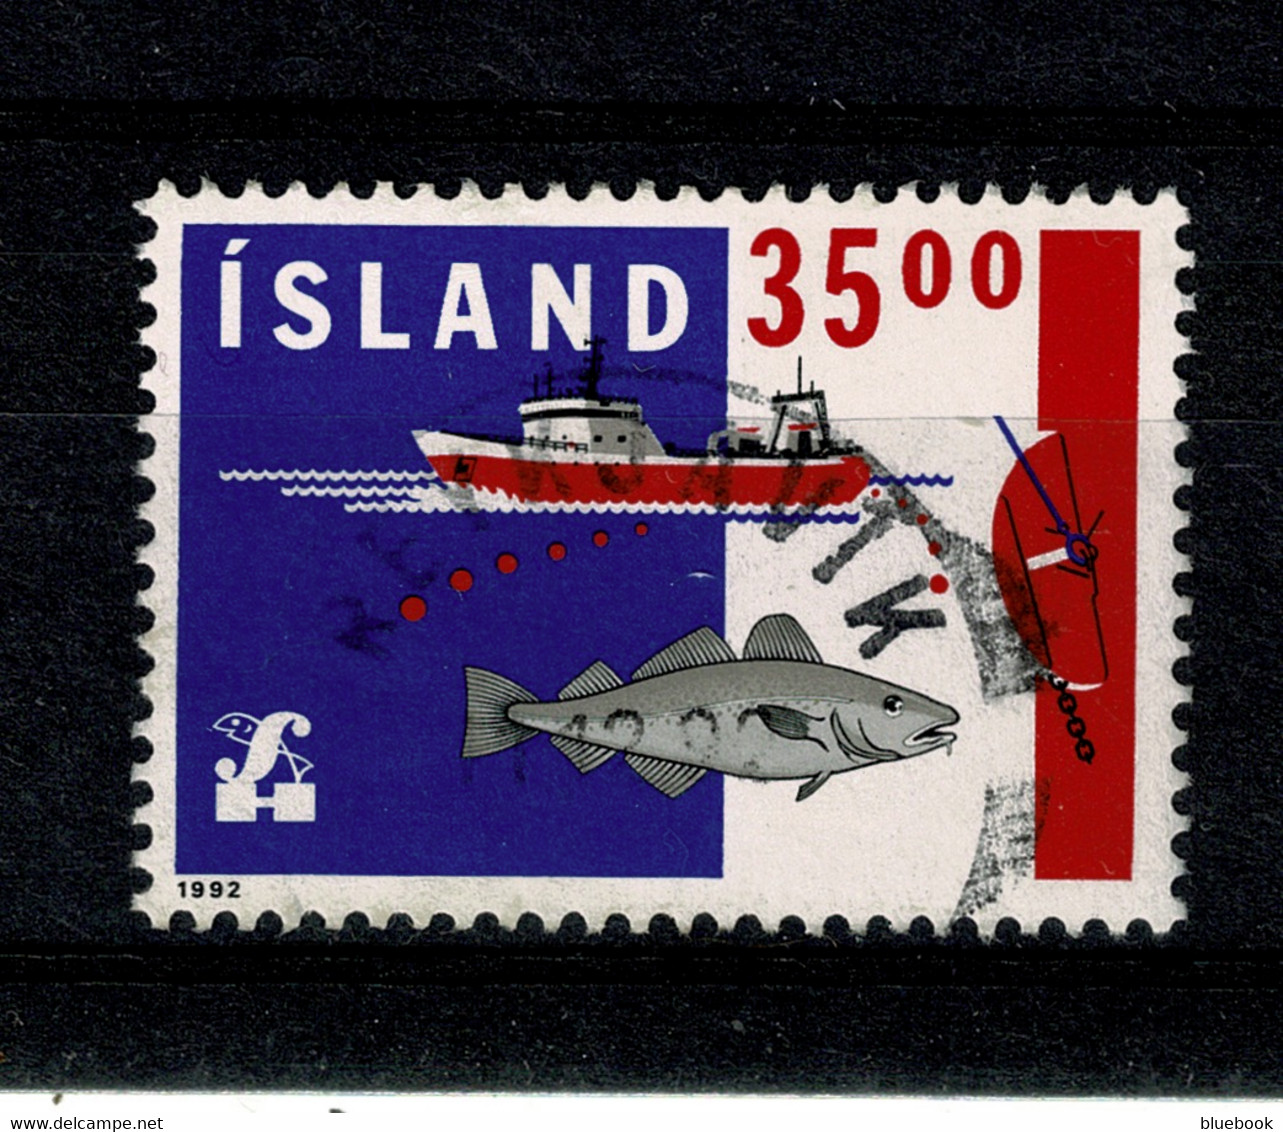 Ref 1451 - 1992 Iceland - 55k Camber Of Commerce - Trawler Ship - Used Stamp - SG 780 - Transport Theme - Gebruikt